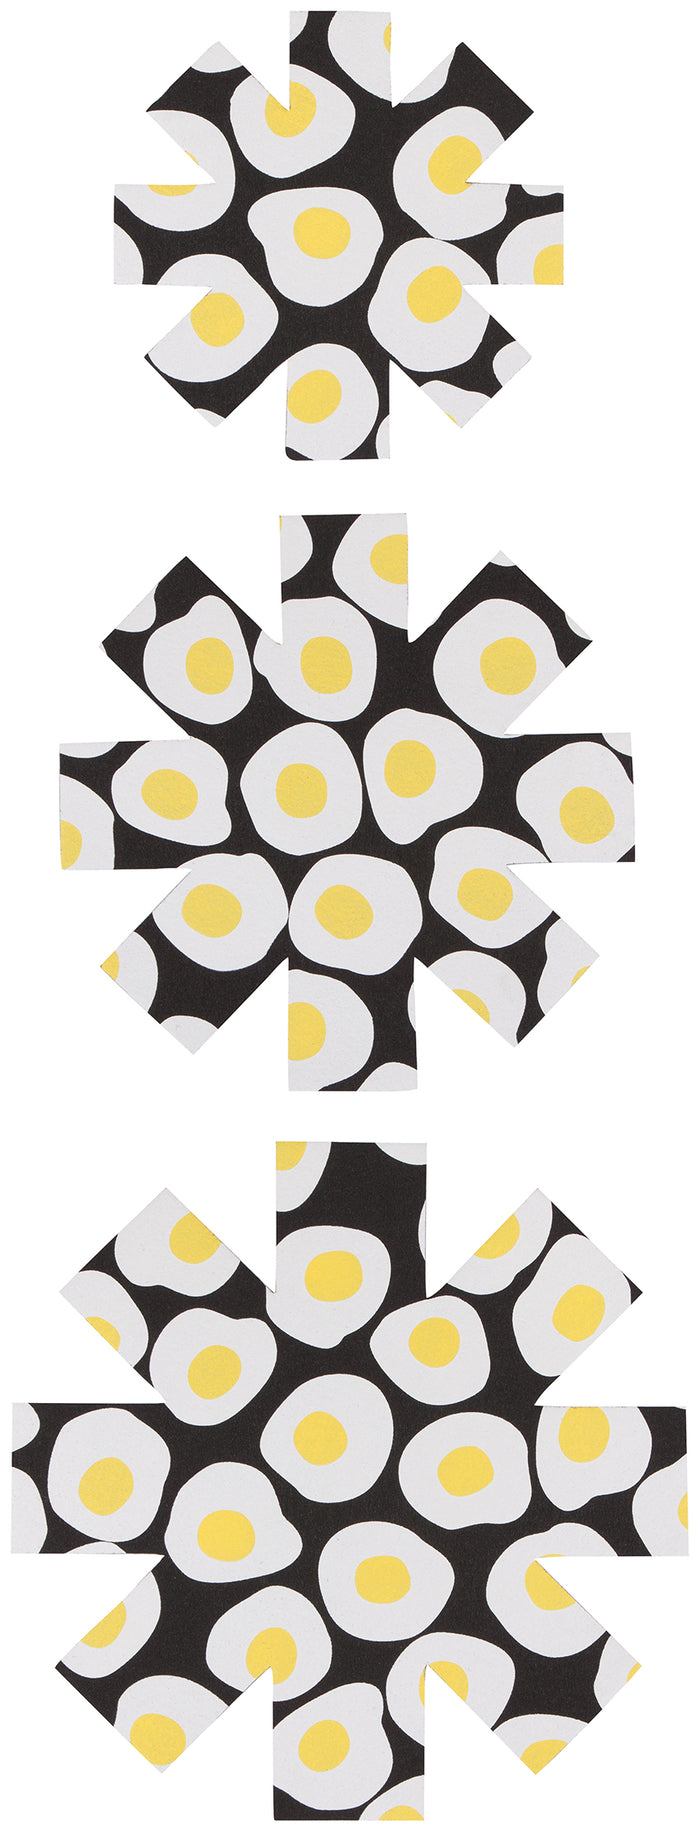 Danica Now Designs Pan Protectors Set of 3, Eggs